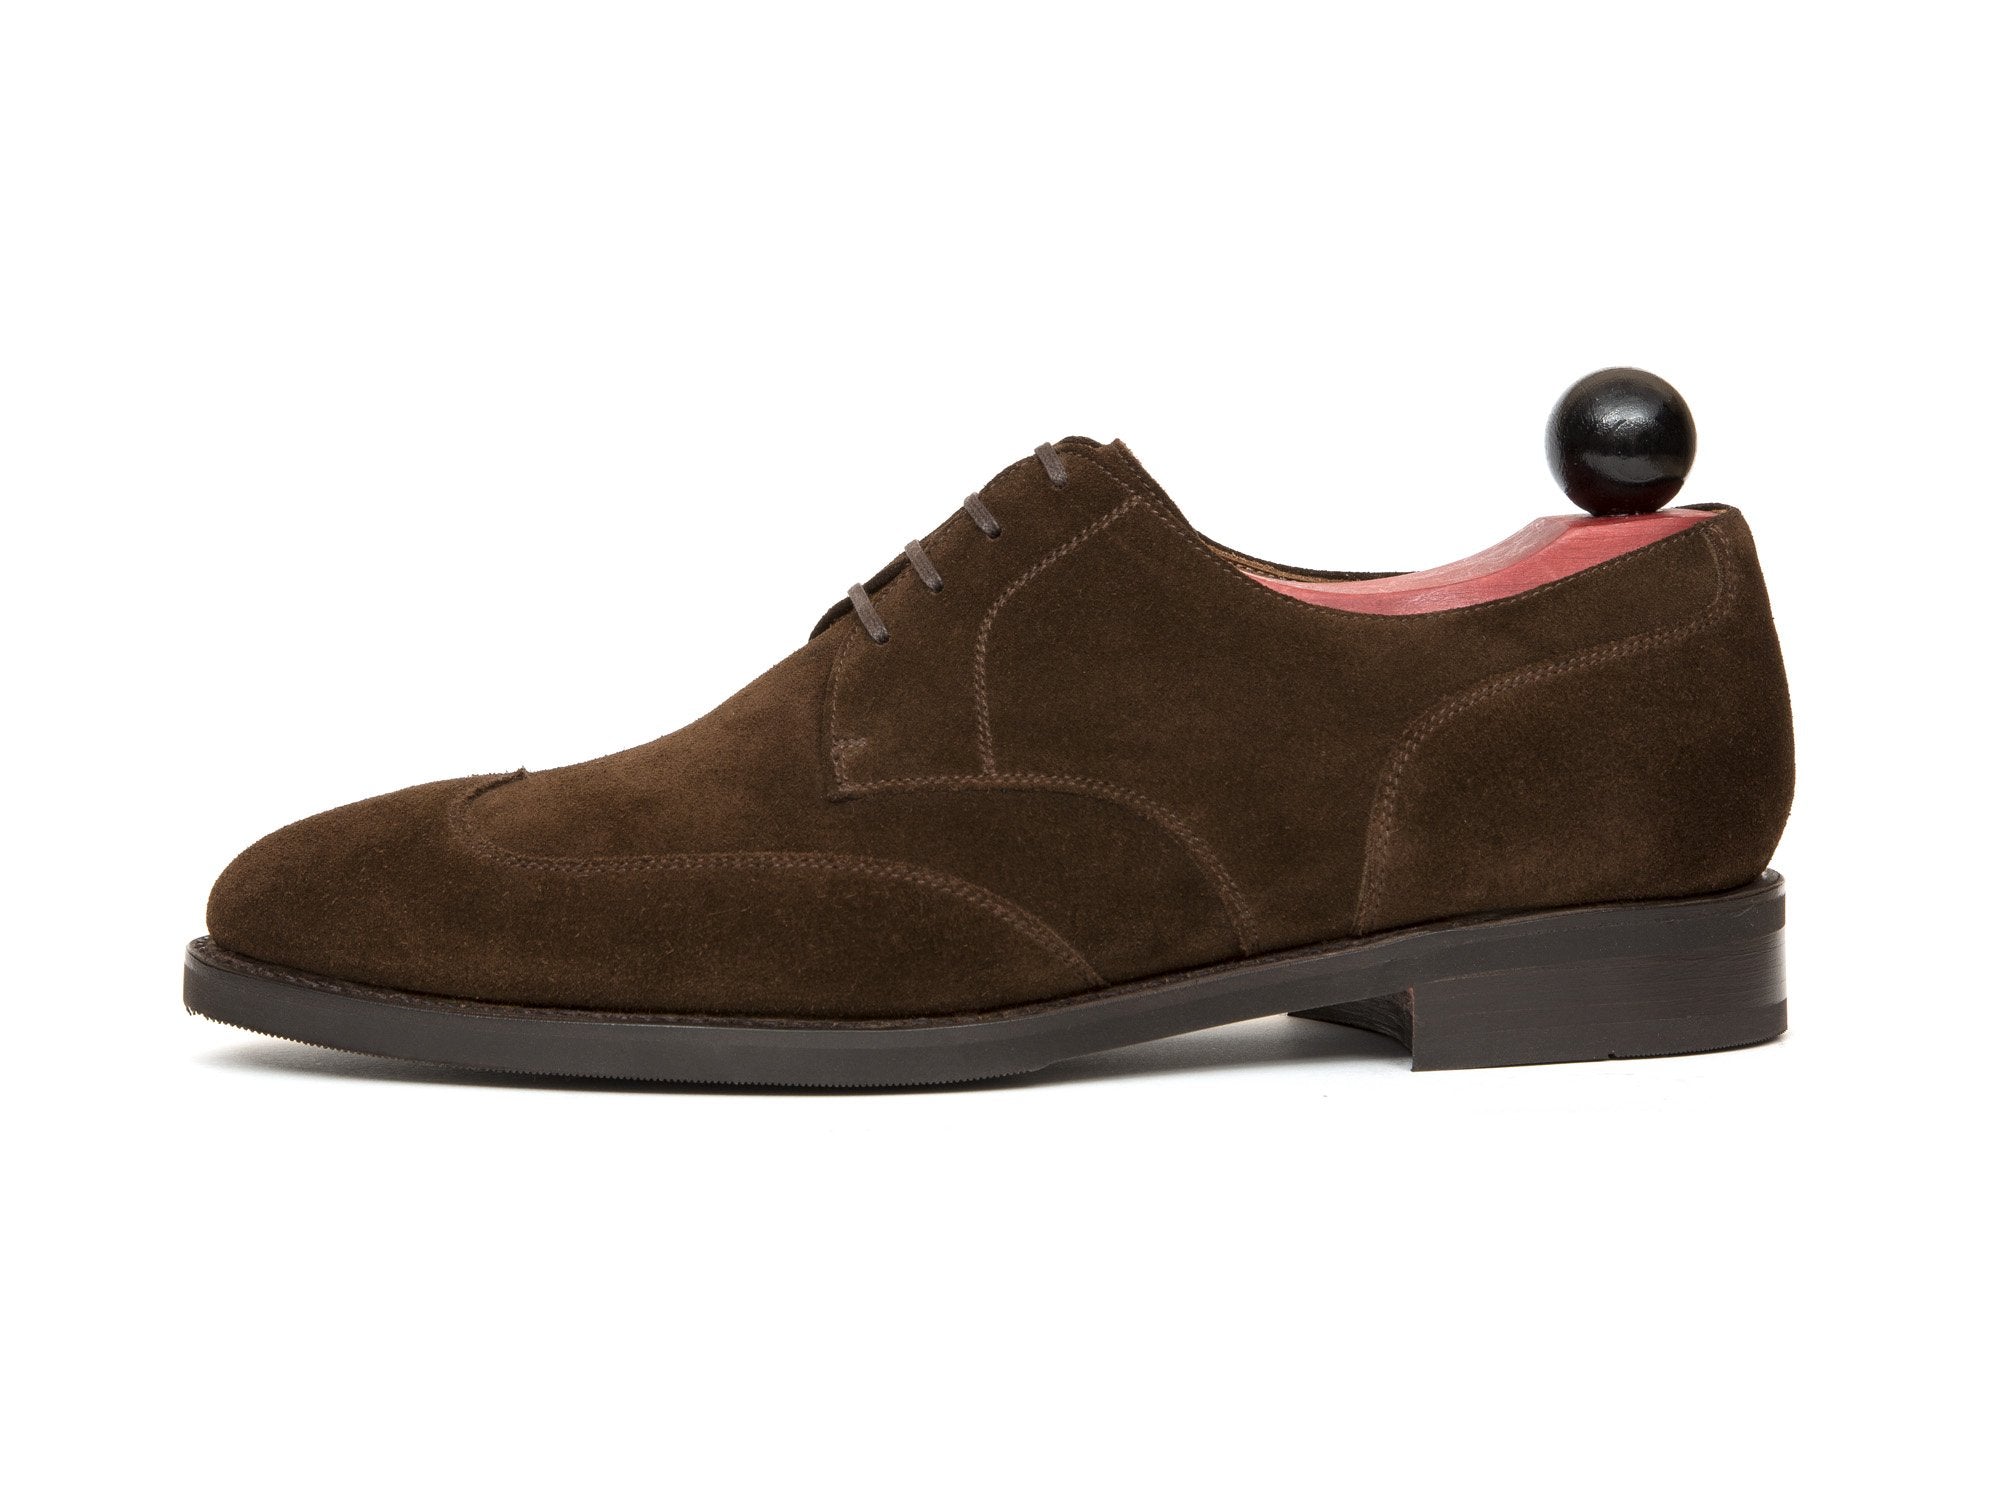 J.FitzPatrick Footwear - Dayton - Dark Brown Suede - TMG Last - City Rubber Sole